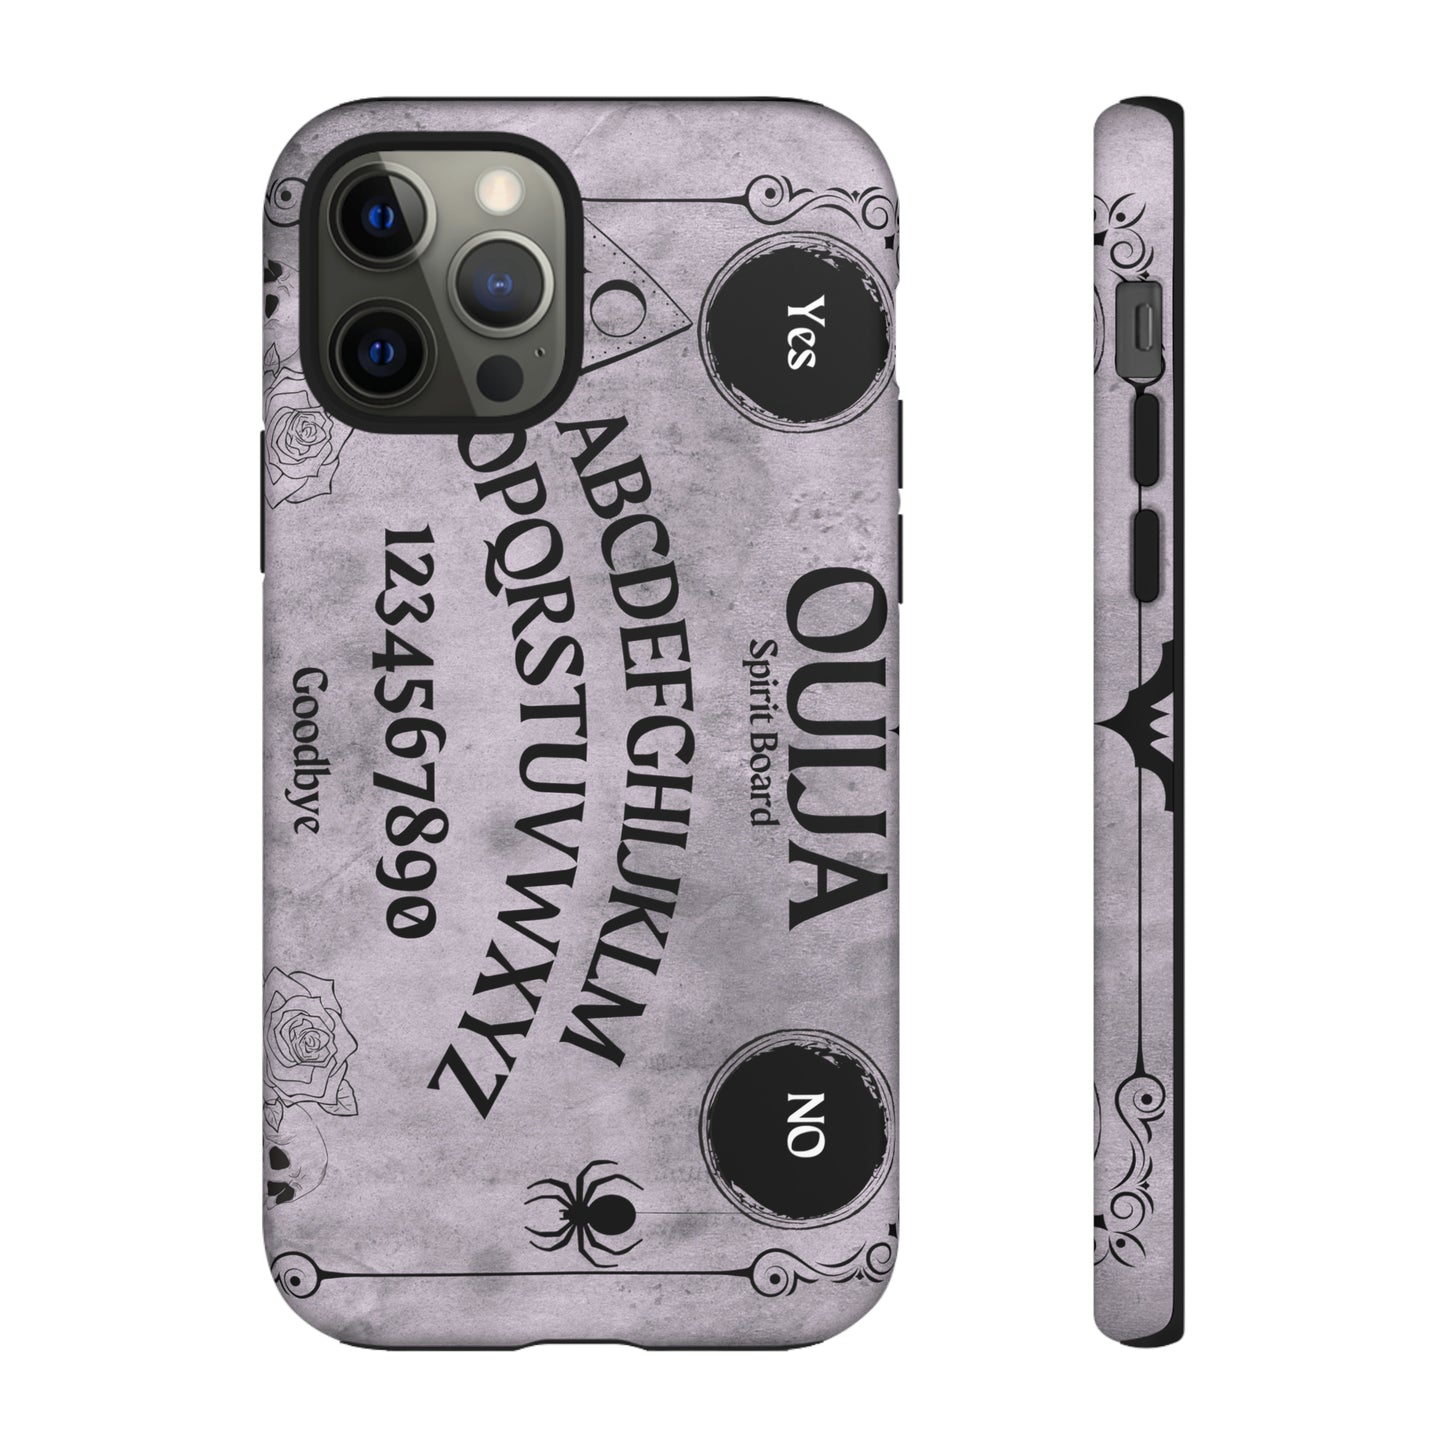 Ouija Board Tough Phone Cases For Samsung iPhone GooglePhone CaseVTZdesignsiPhone 12 ProMatteAccessoriesGlossyhalloween